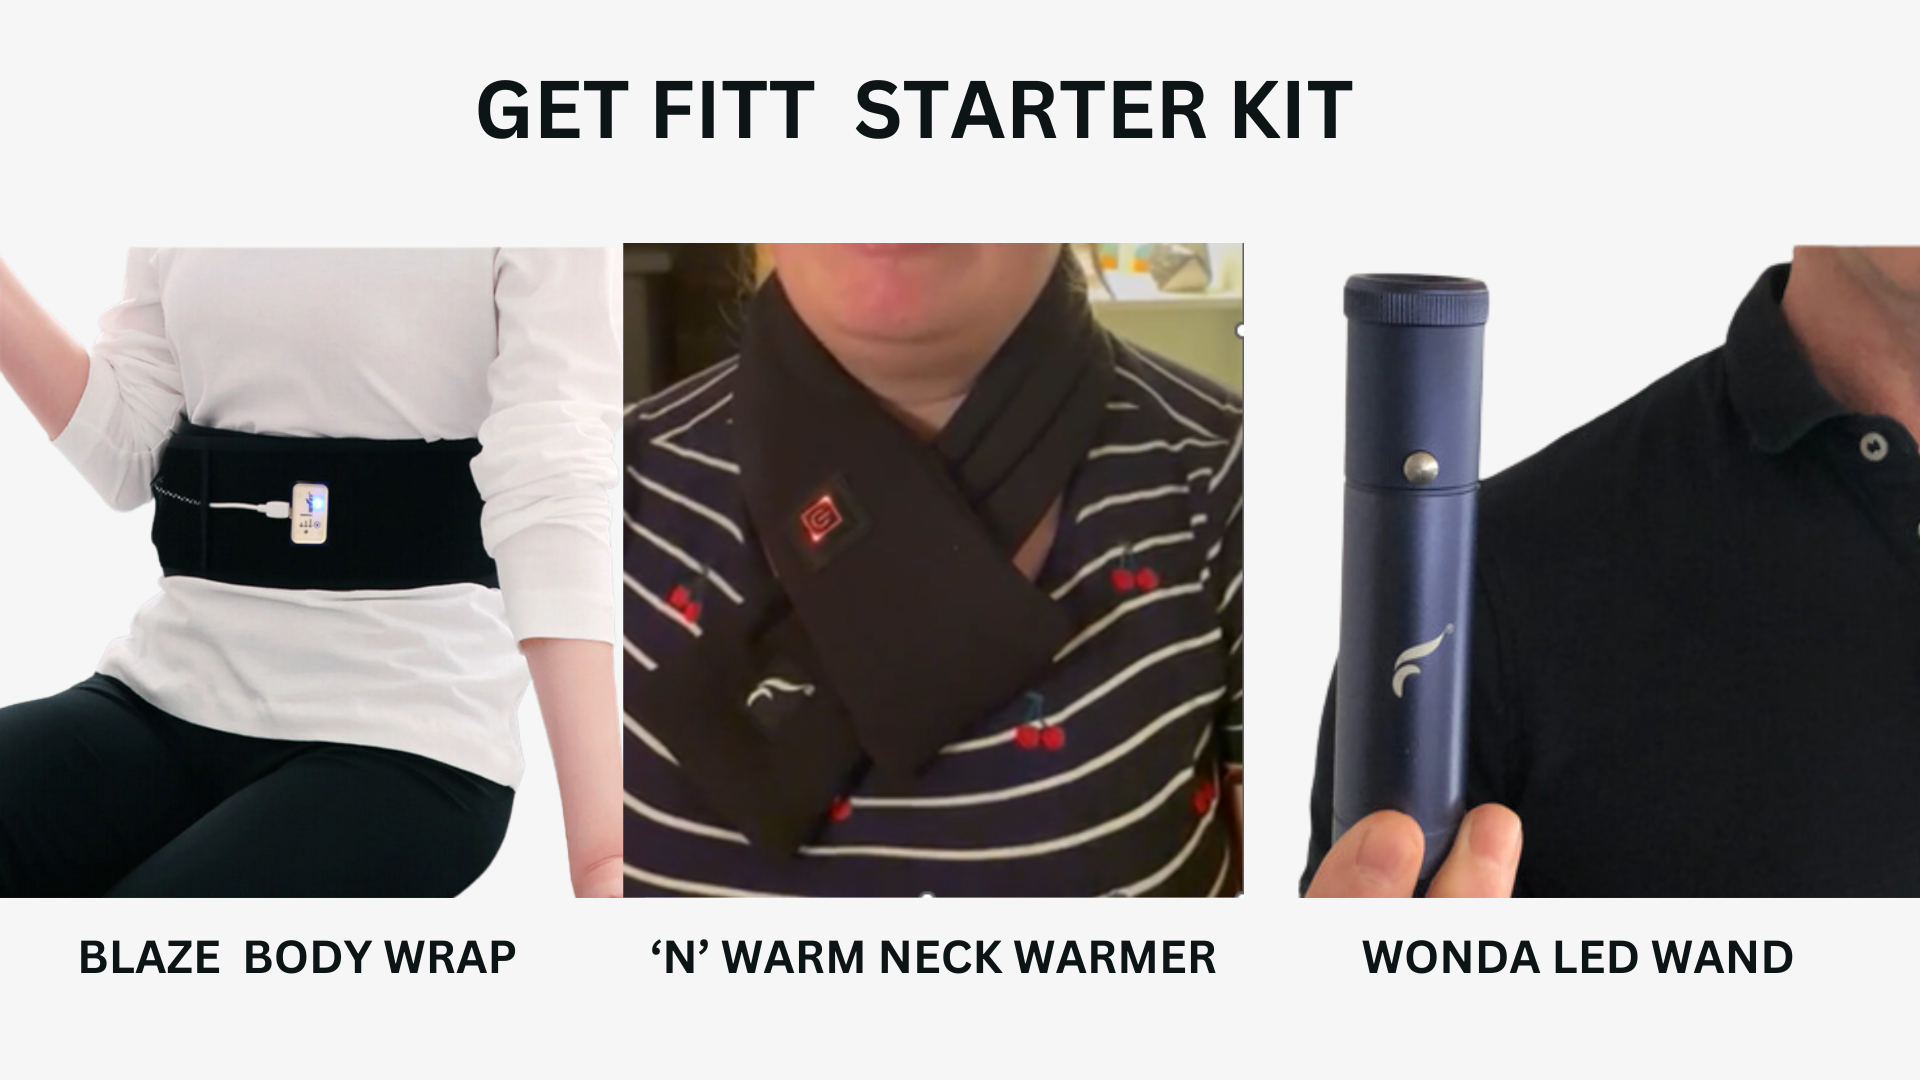 Limited Edition Starter Kit - 'BLAZE' Far Body Wrap, 'N' Warm Neck Wrap & Wonda LED Wand - Get 5% Off